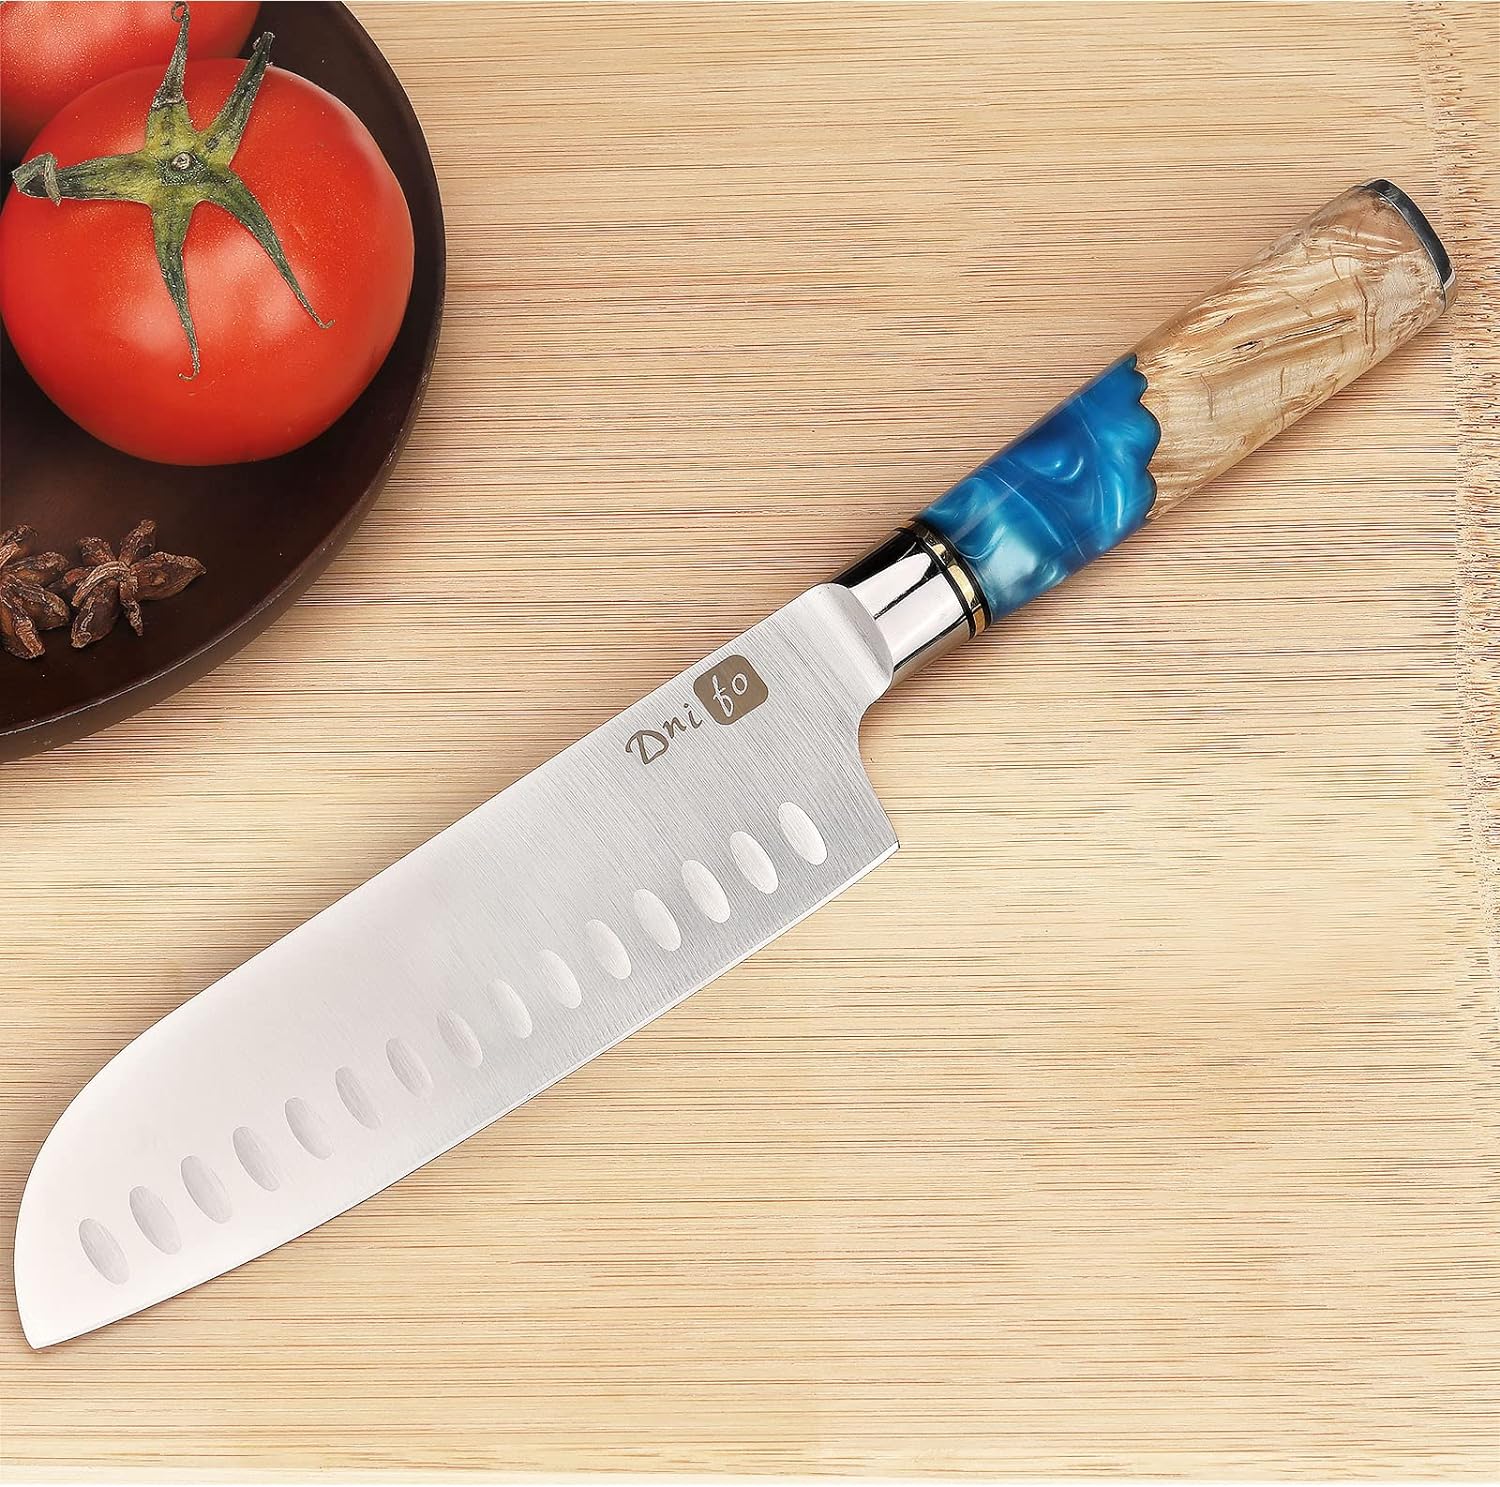 Chef Knife, 8-inch Japanese Kiritsuke Chef Knife, Super Sharp Stainless Steel Professional High Carbon Japanese Kitchen Knife, Ergonomic Resin Wood Handle with Sheath Gift Box